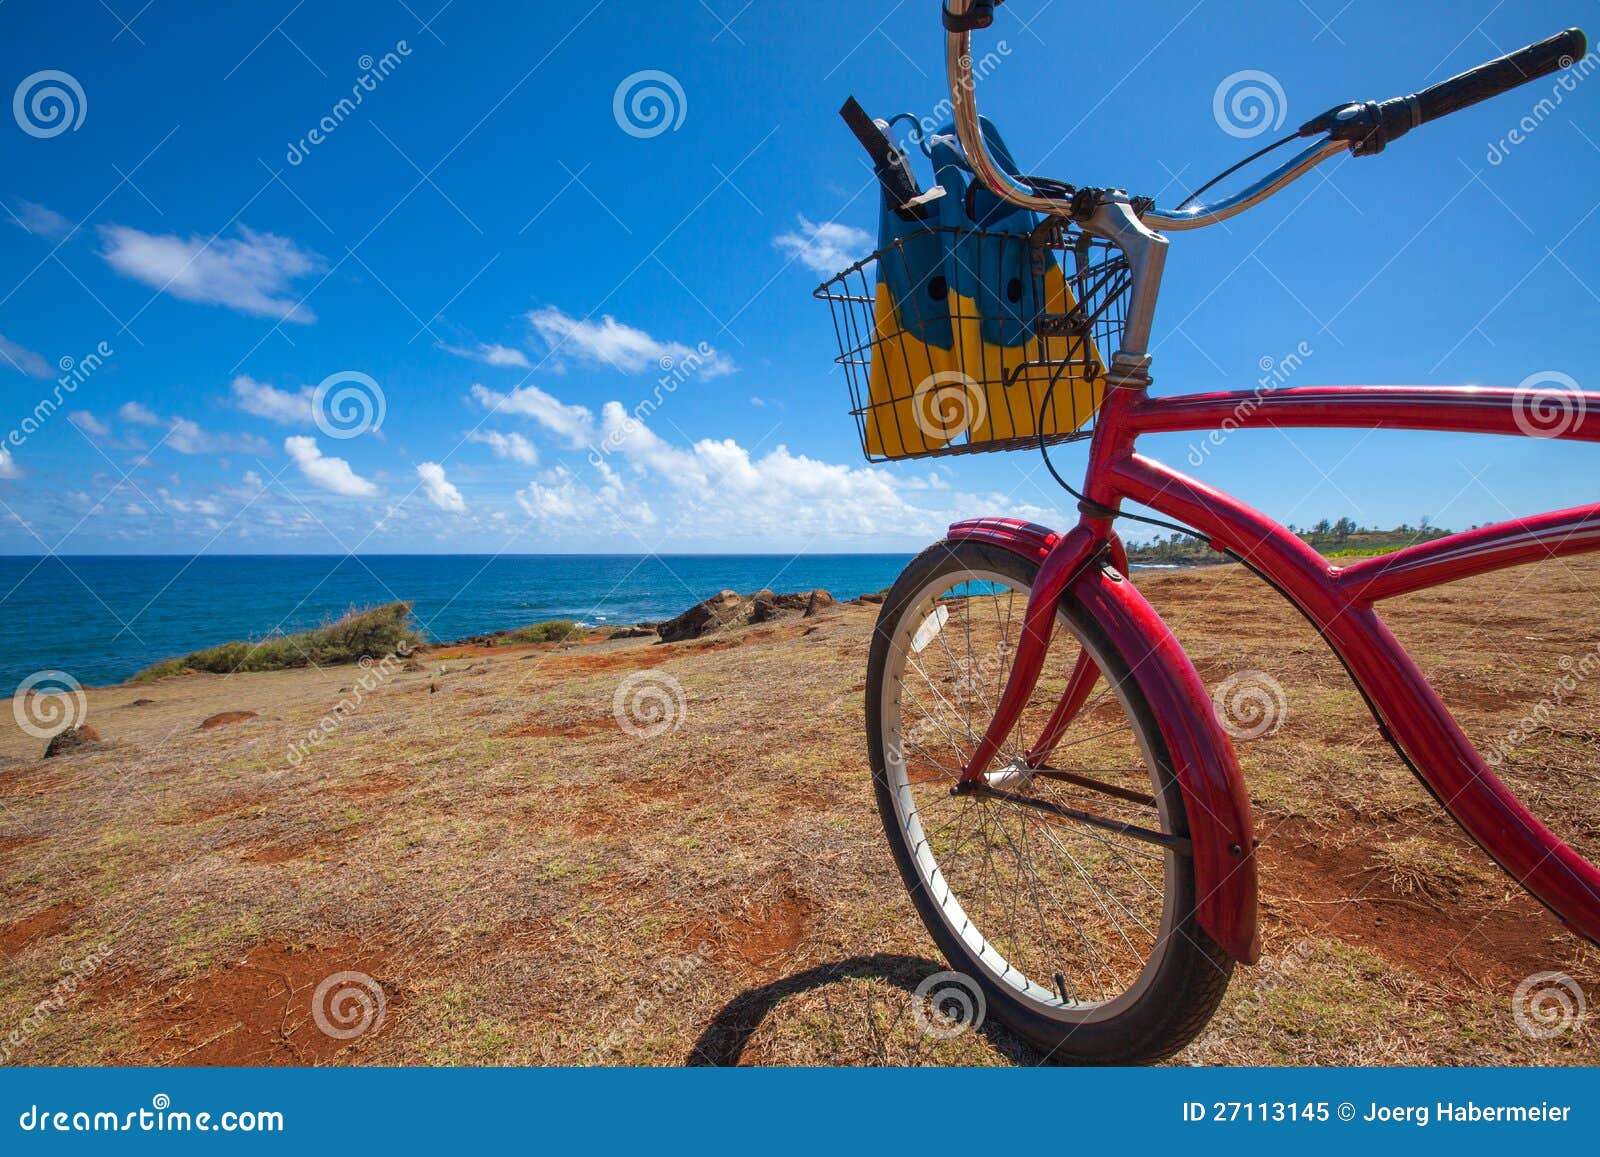 beach bike and swim fins overlooking the ocean